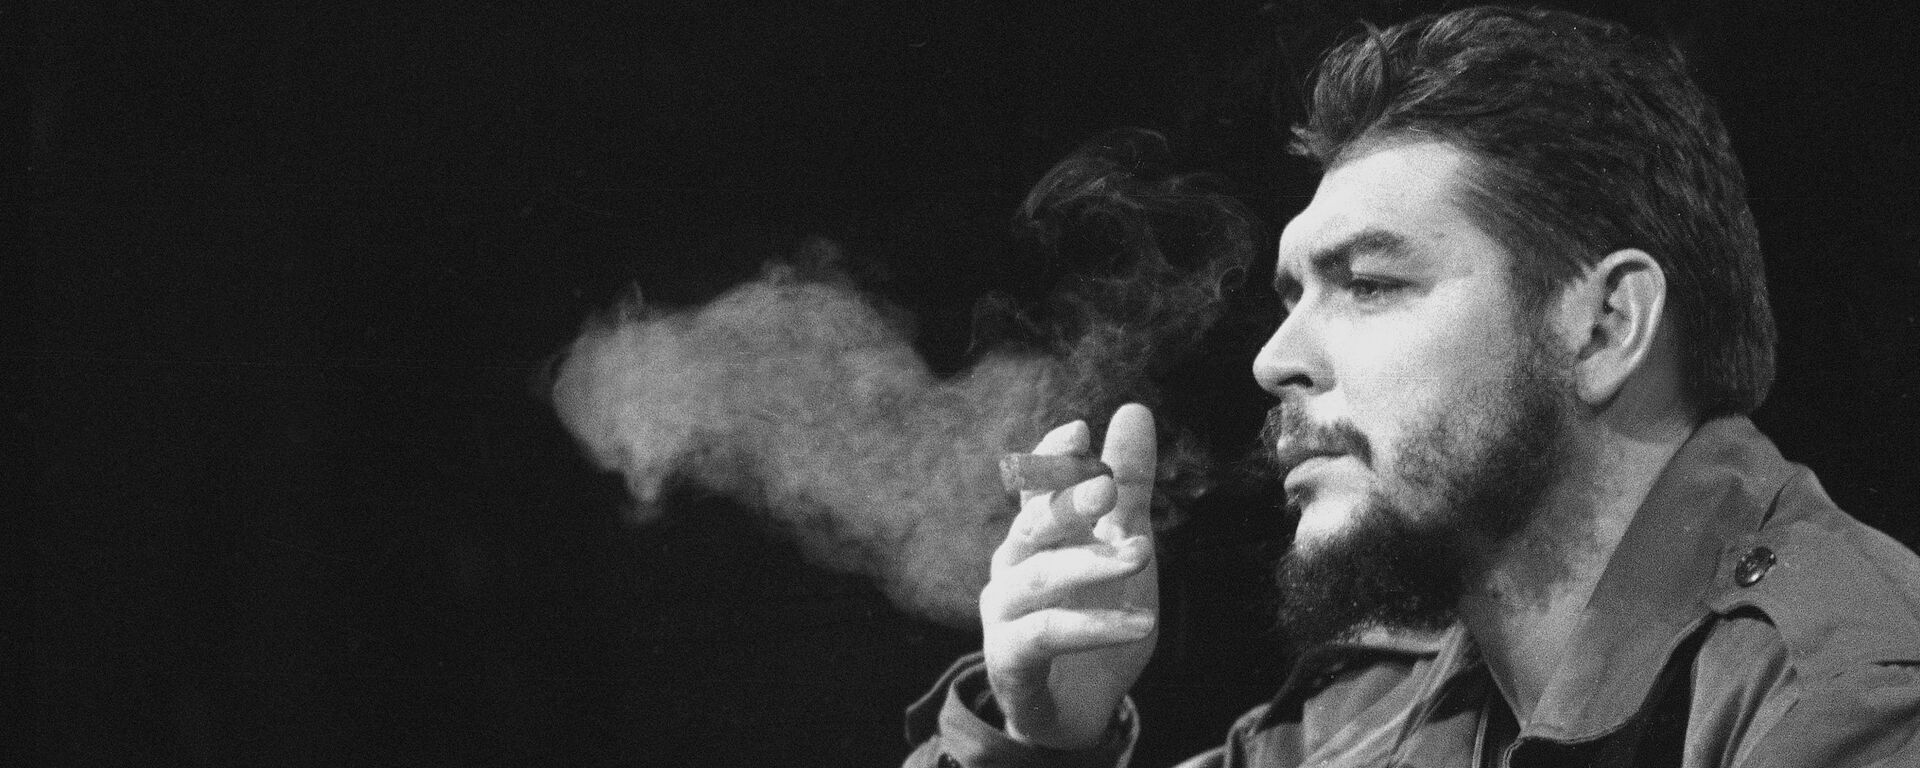 Ernesto Che Guevara - Sputnik Mundo, 1920, 08.10.2017